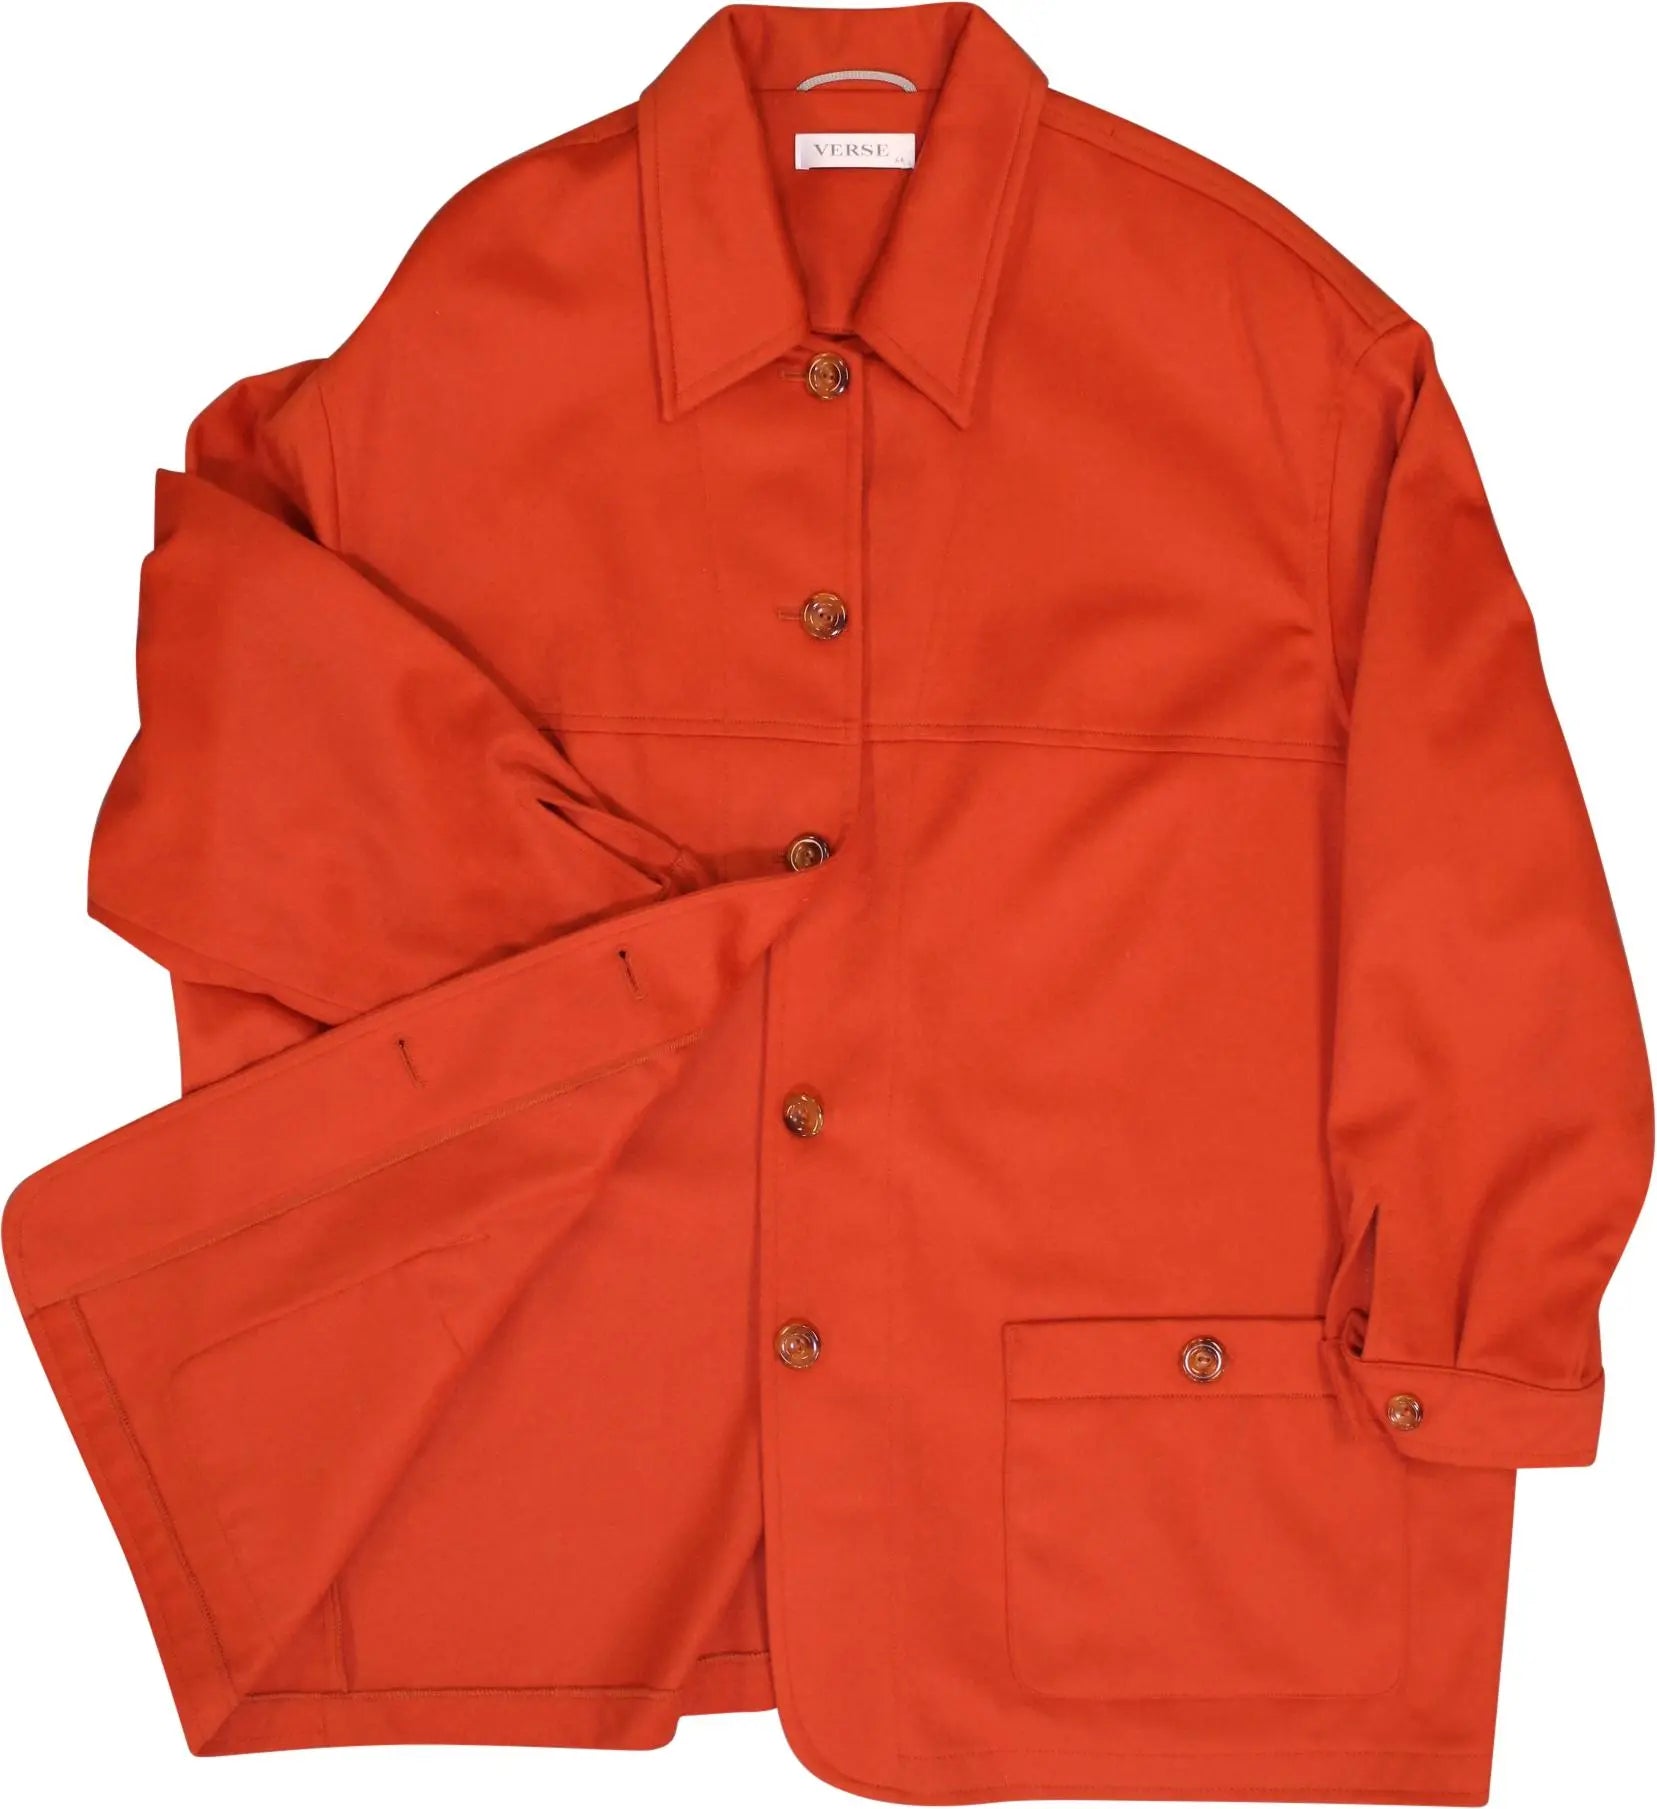 Verse - Orange Wool Blend Coat with Shoulder Pads- ThriftTale.com - Vintage and second handclothing